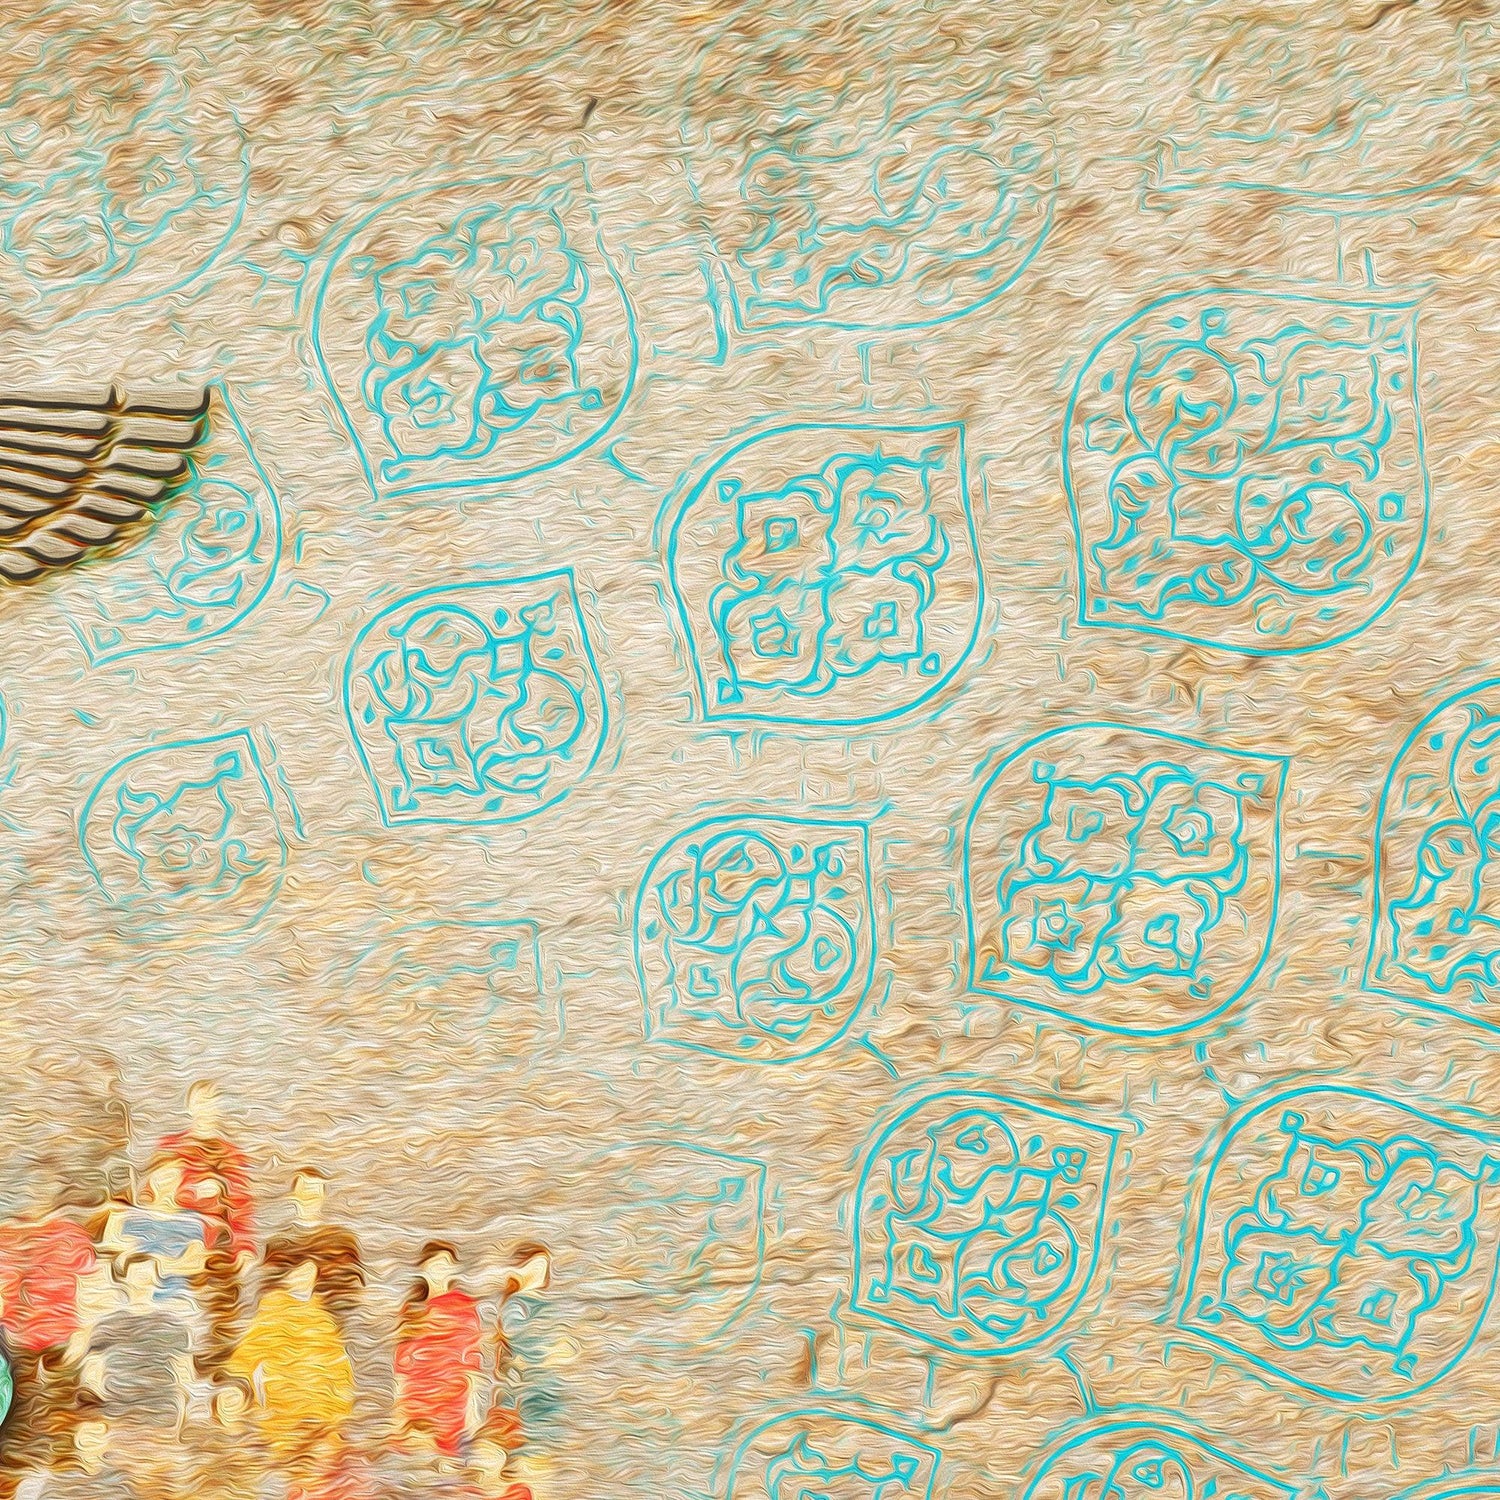 IRAN | Persian Wall Art | Iranian Wall Art - ORIAVI Persian Art, persian artwork for sale, persian calligraphy, persian calligraphy wall art, persian mix media wall art, persian painting, persian wall art